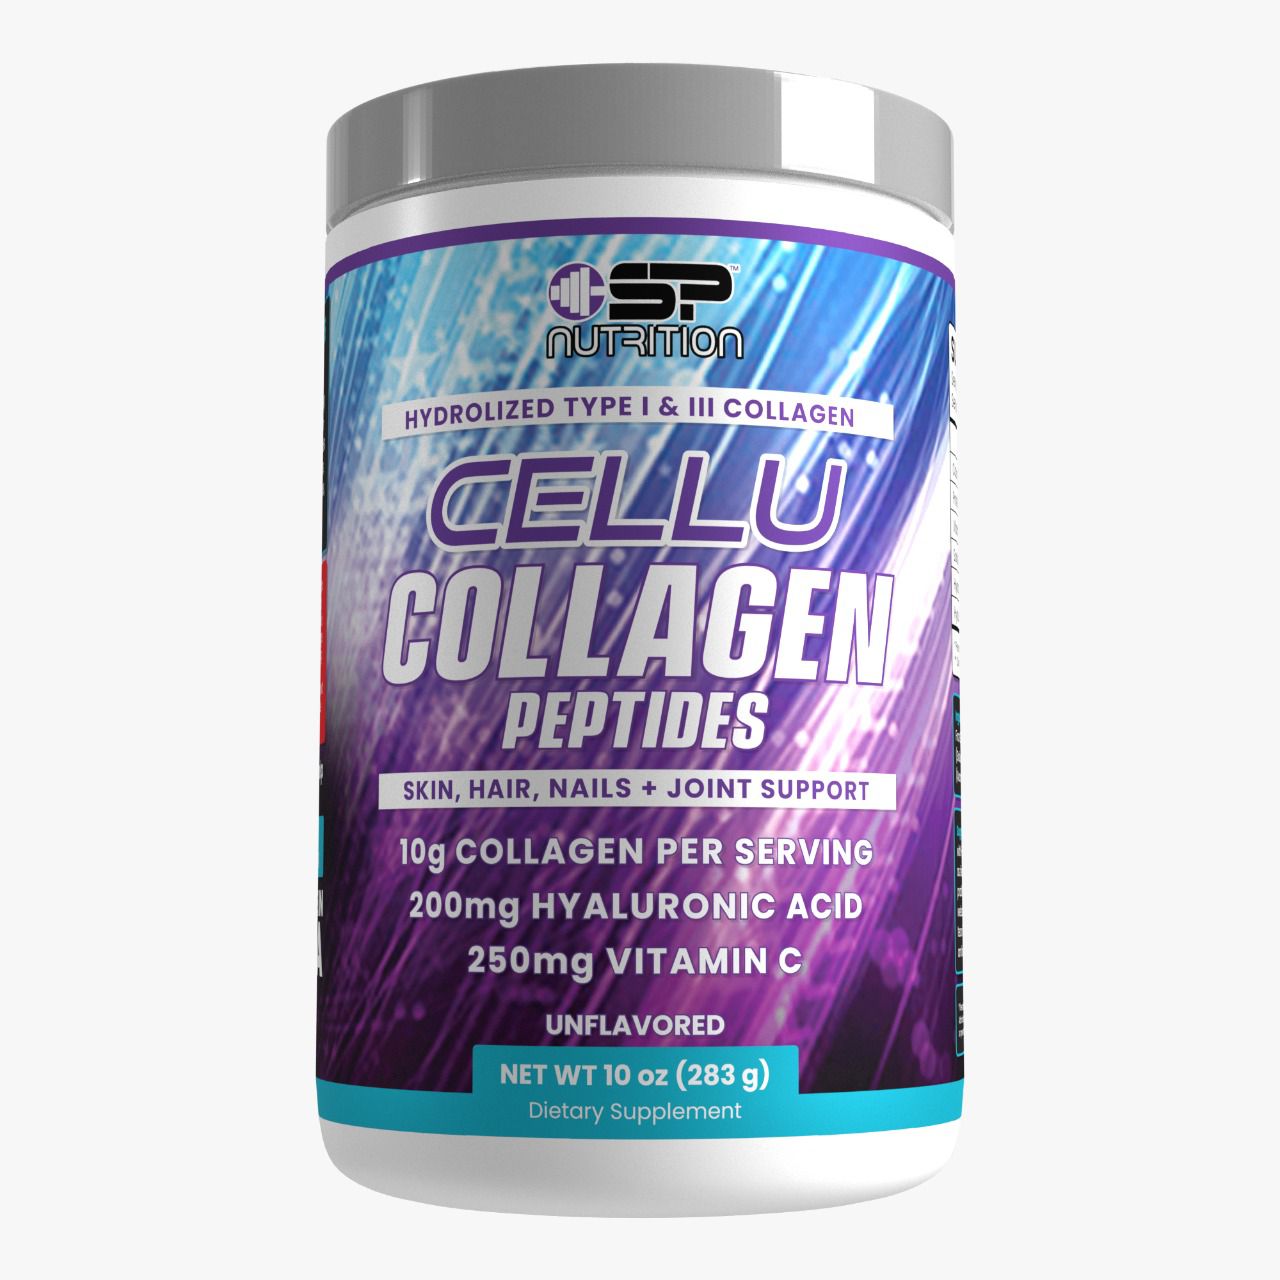 Cellu Collagen Peptides